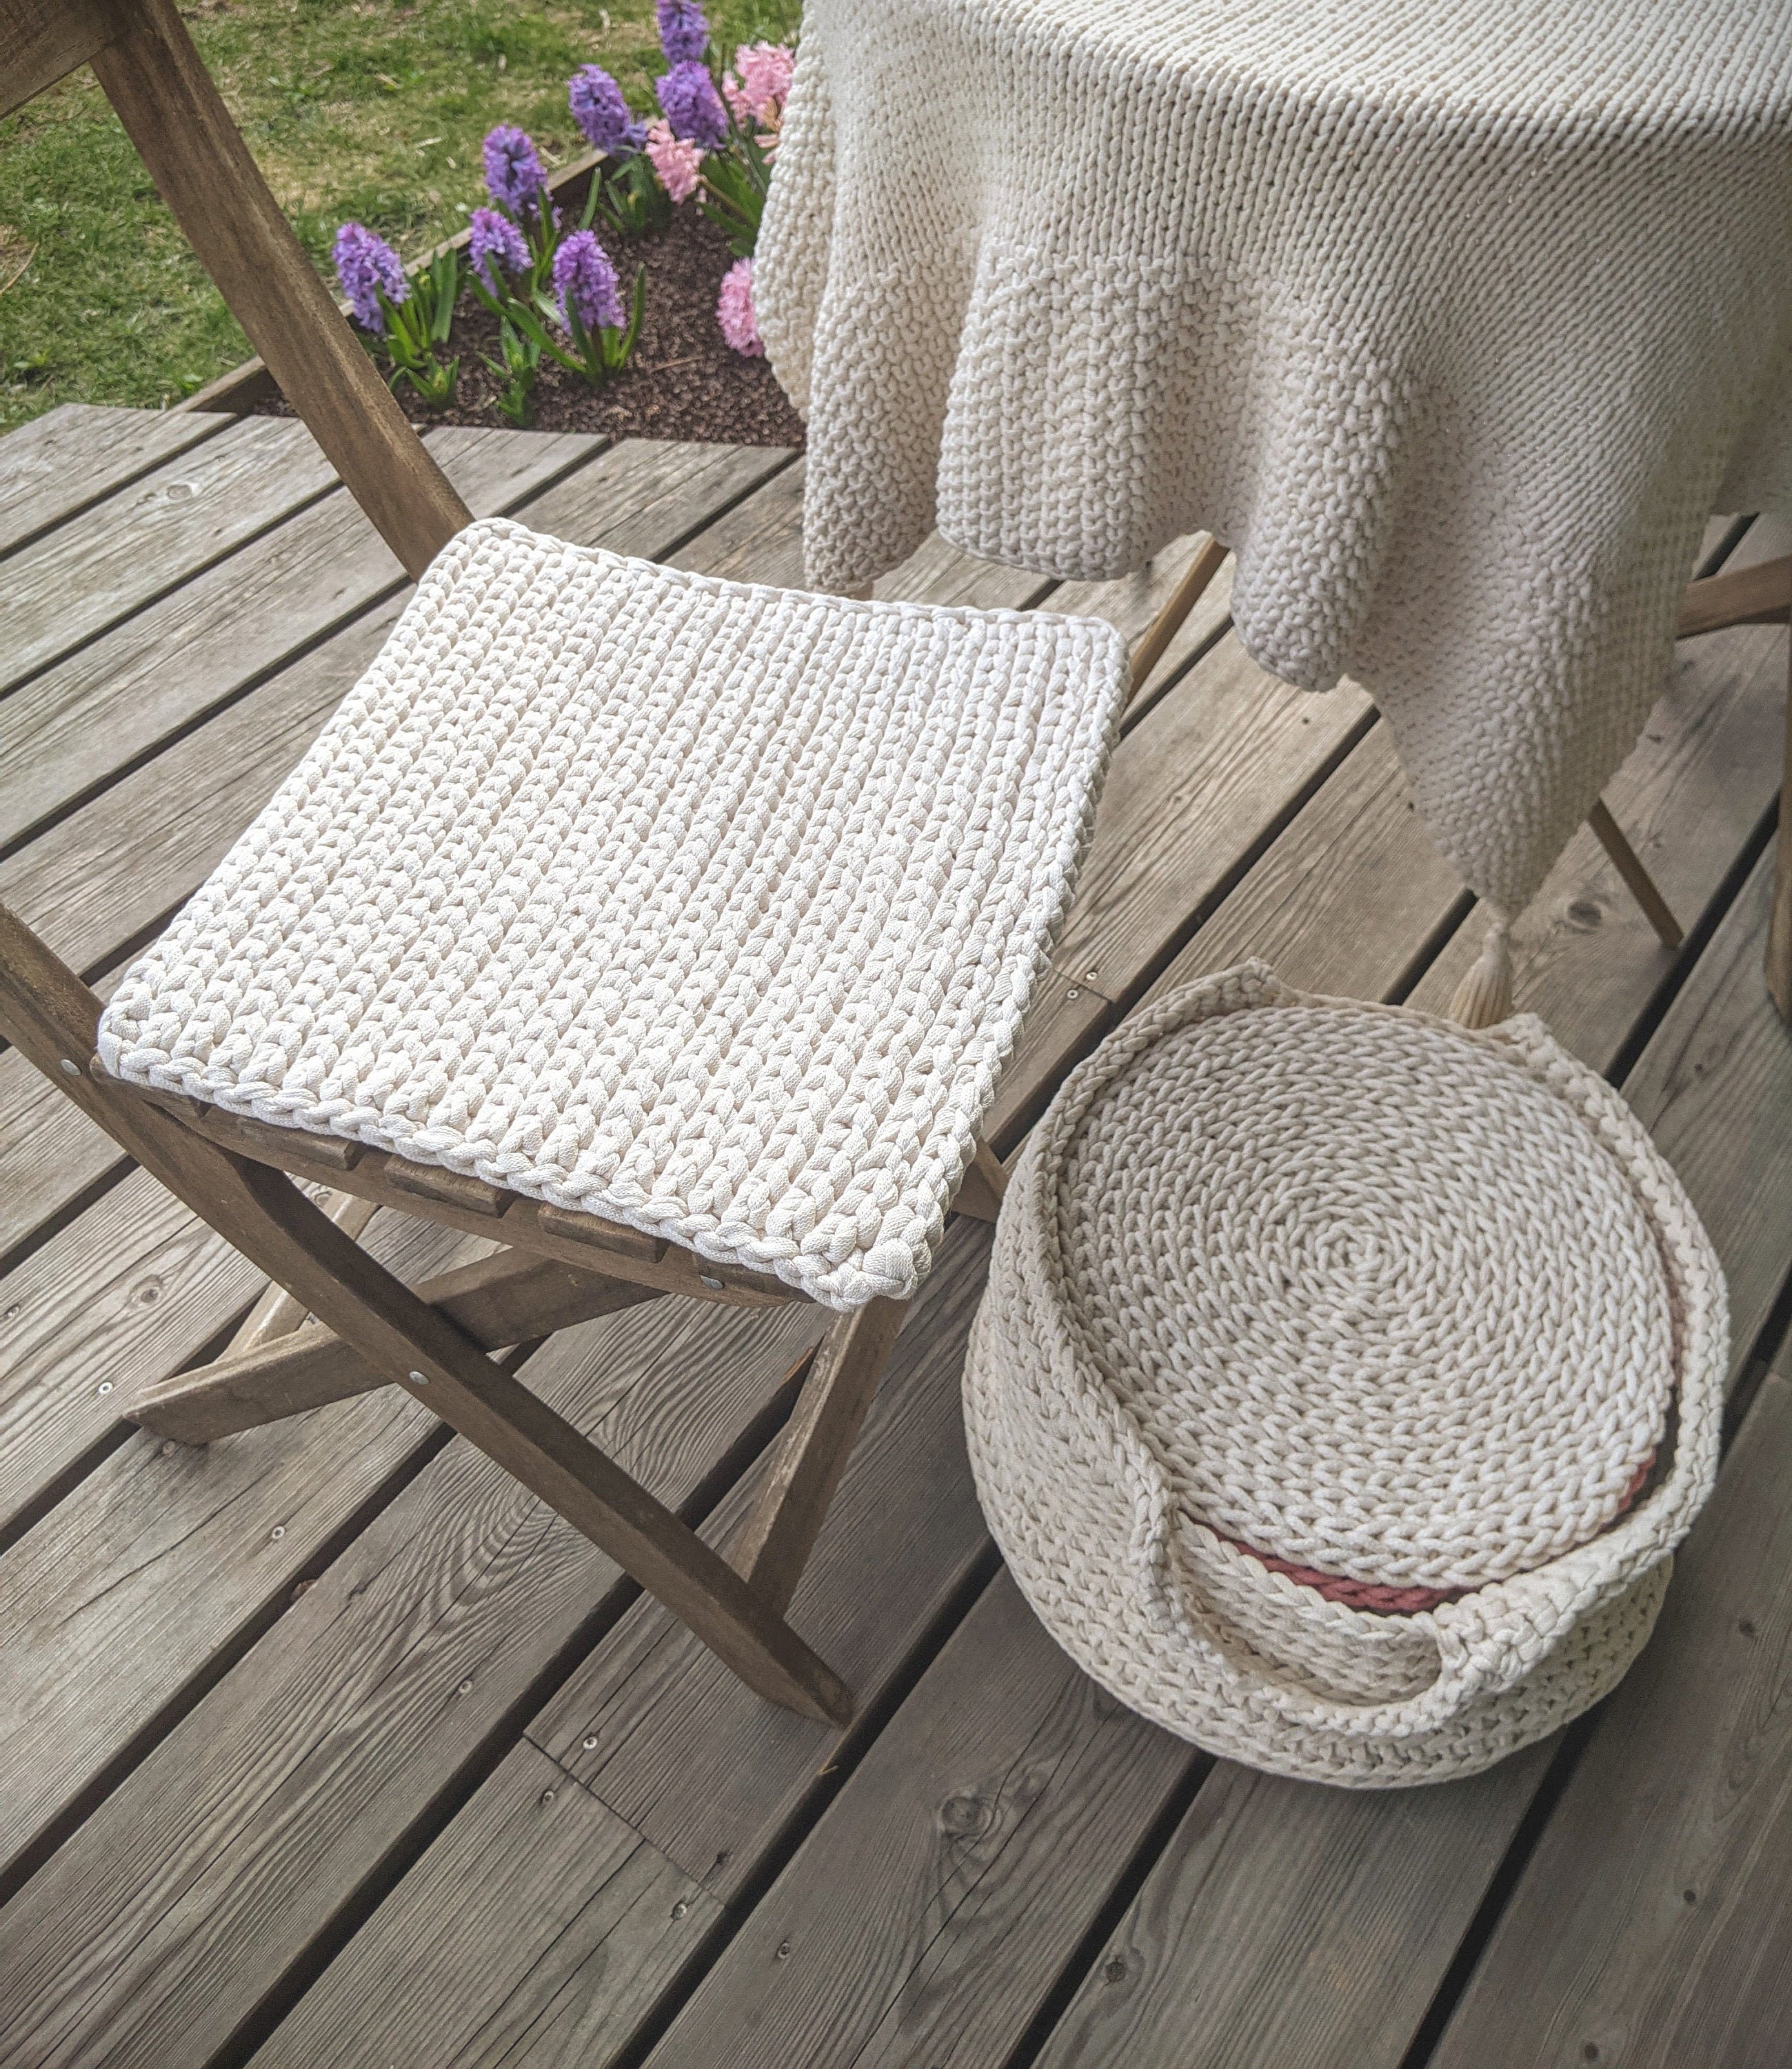 Chunky Crochet Chair Pads Pattern